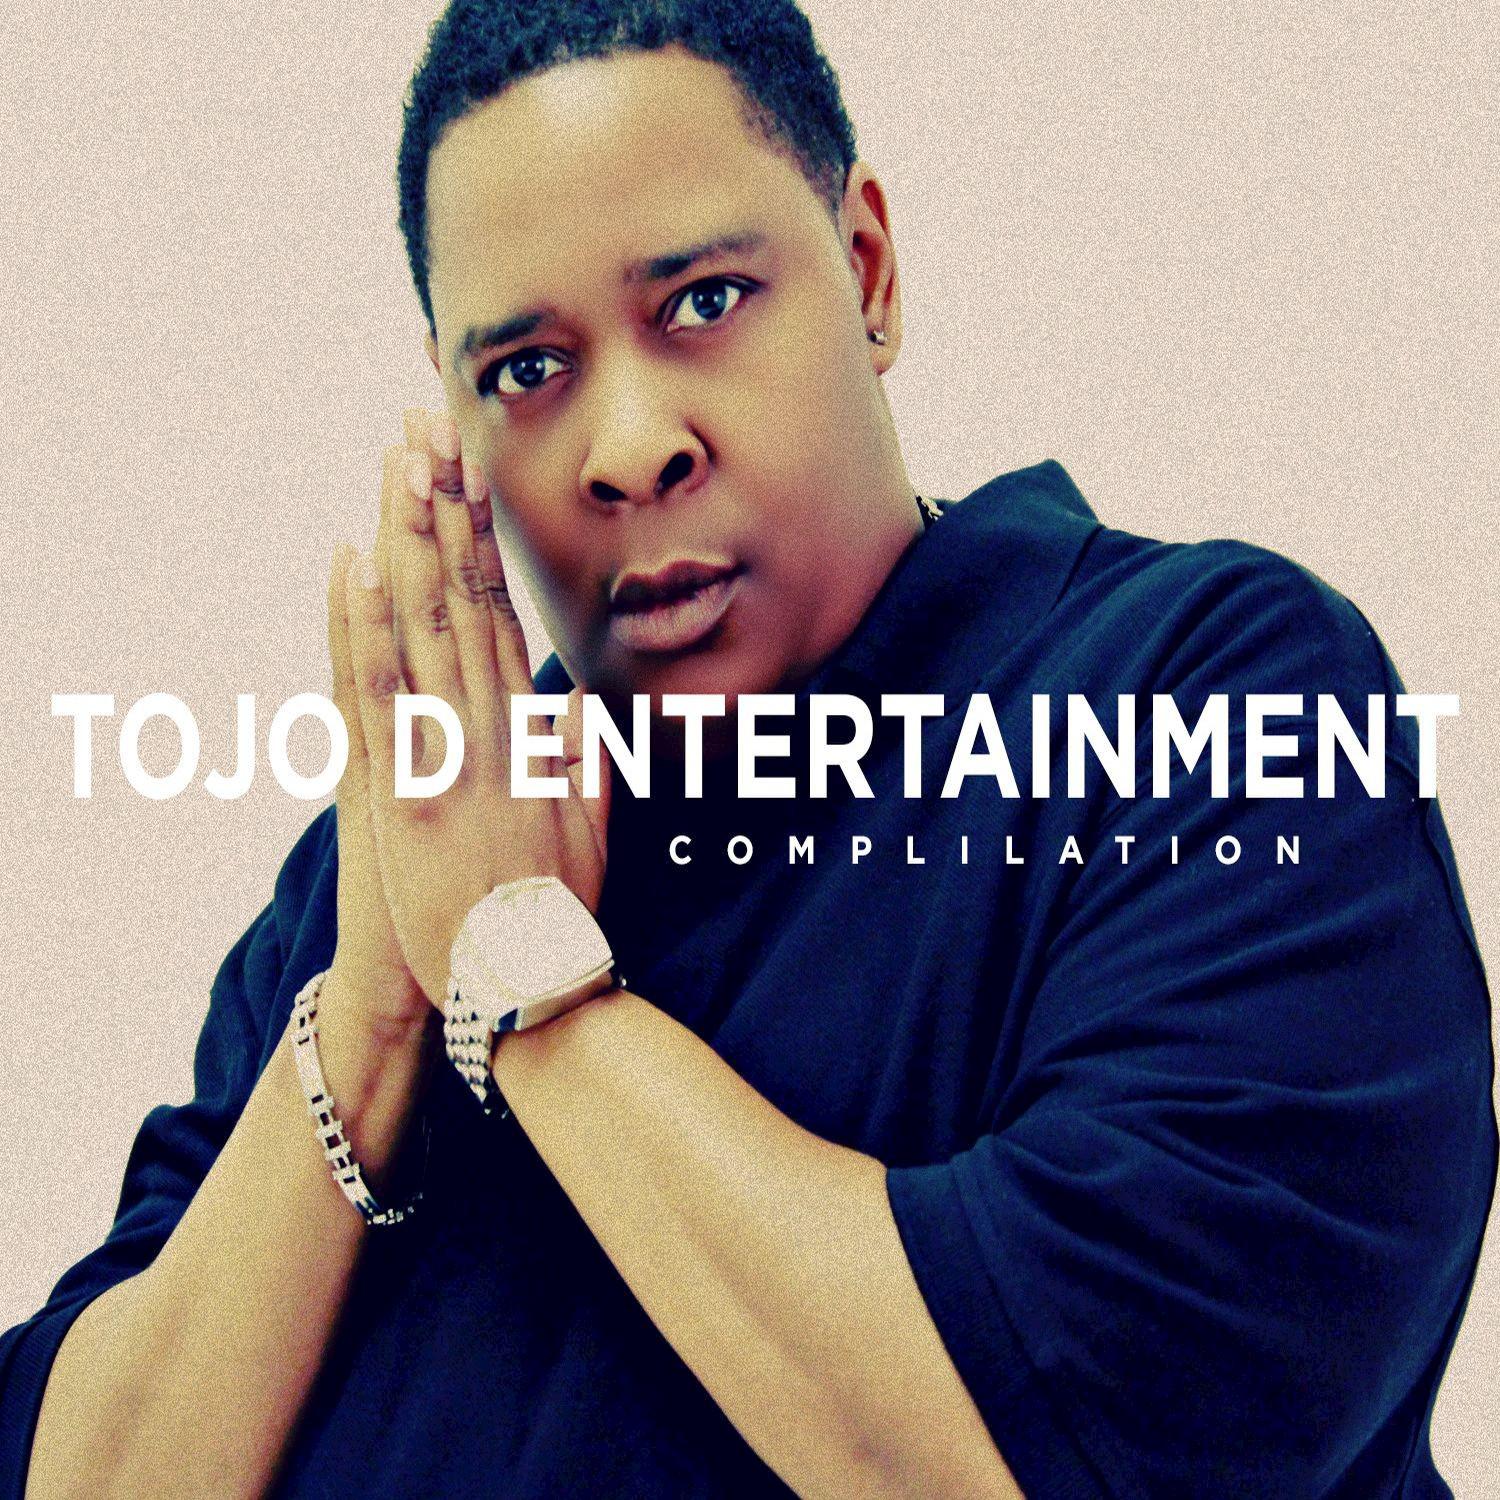 Tojo D Entertainment Compilation